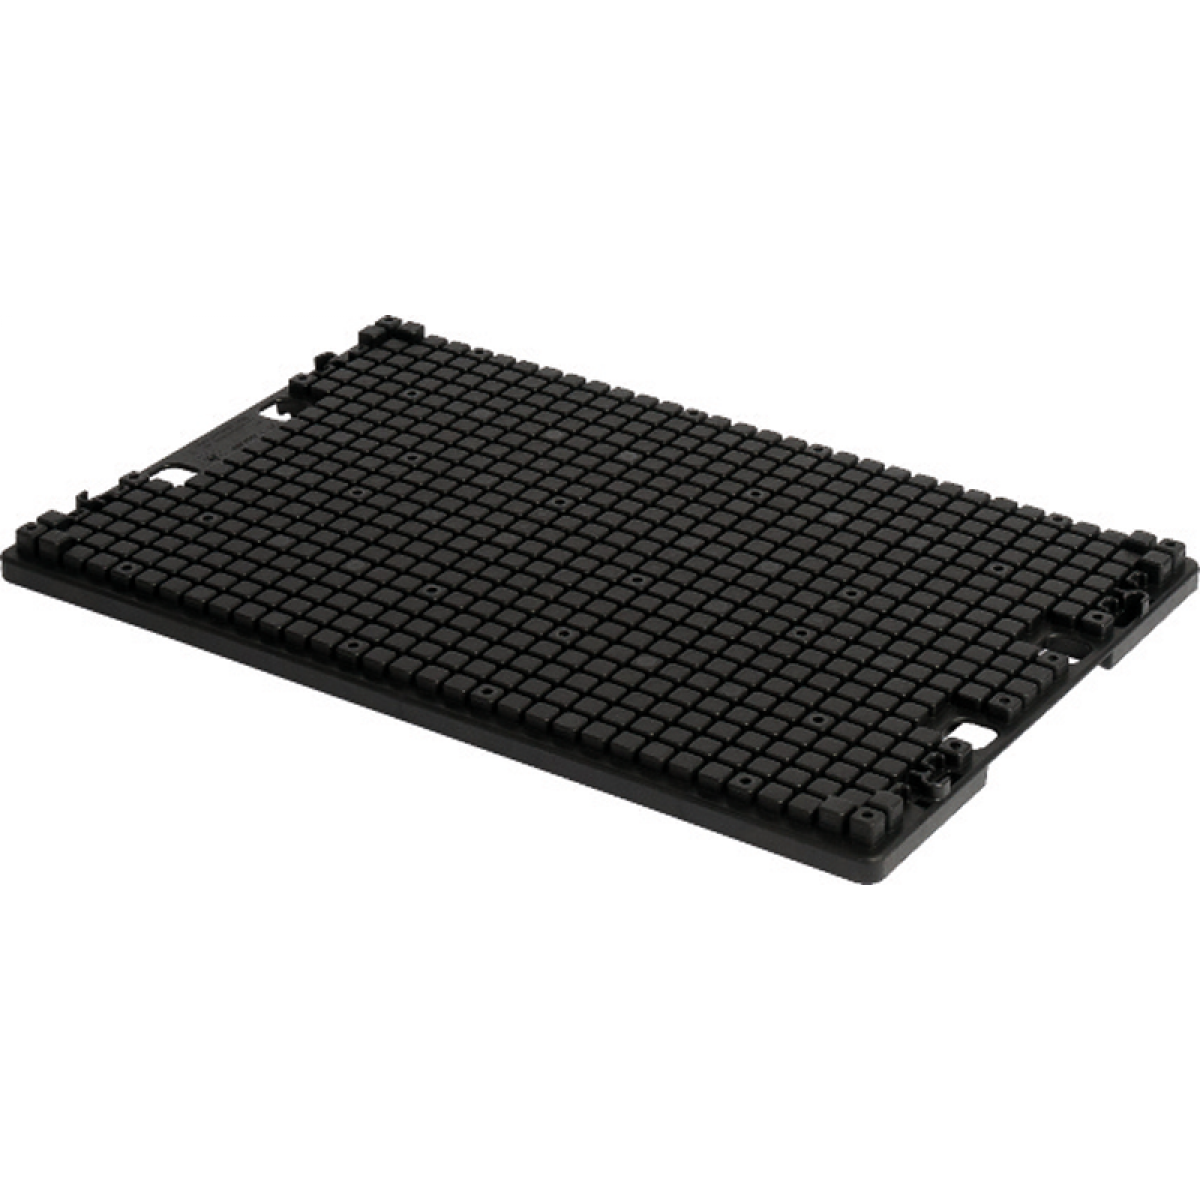 Description:29 PCBs lengthwise / 19 PCBs crosswise, dimples 14 mm square, slot width 3 mm, Dimensions:557 x 357 x 22 mm